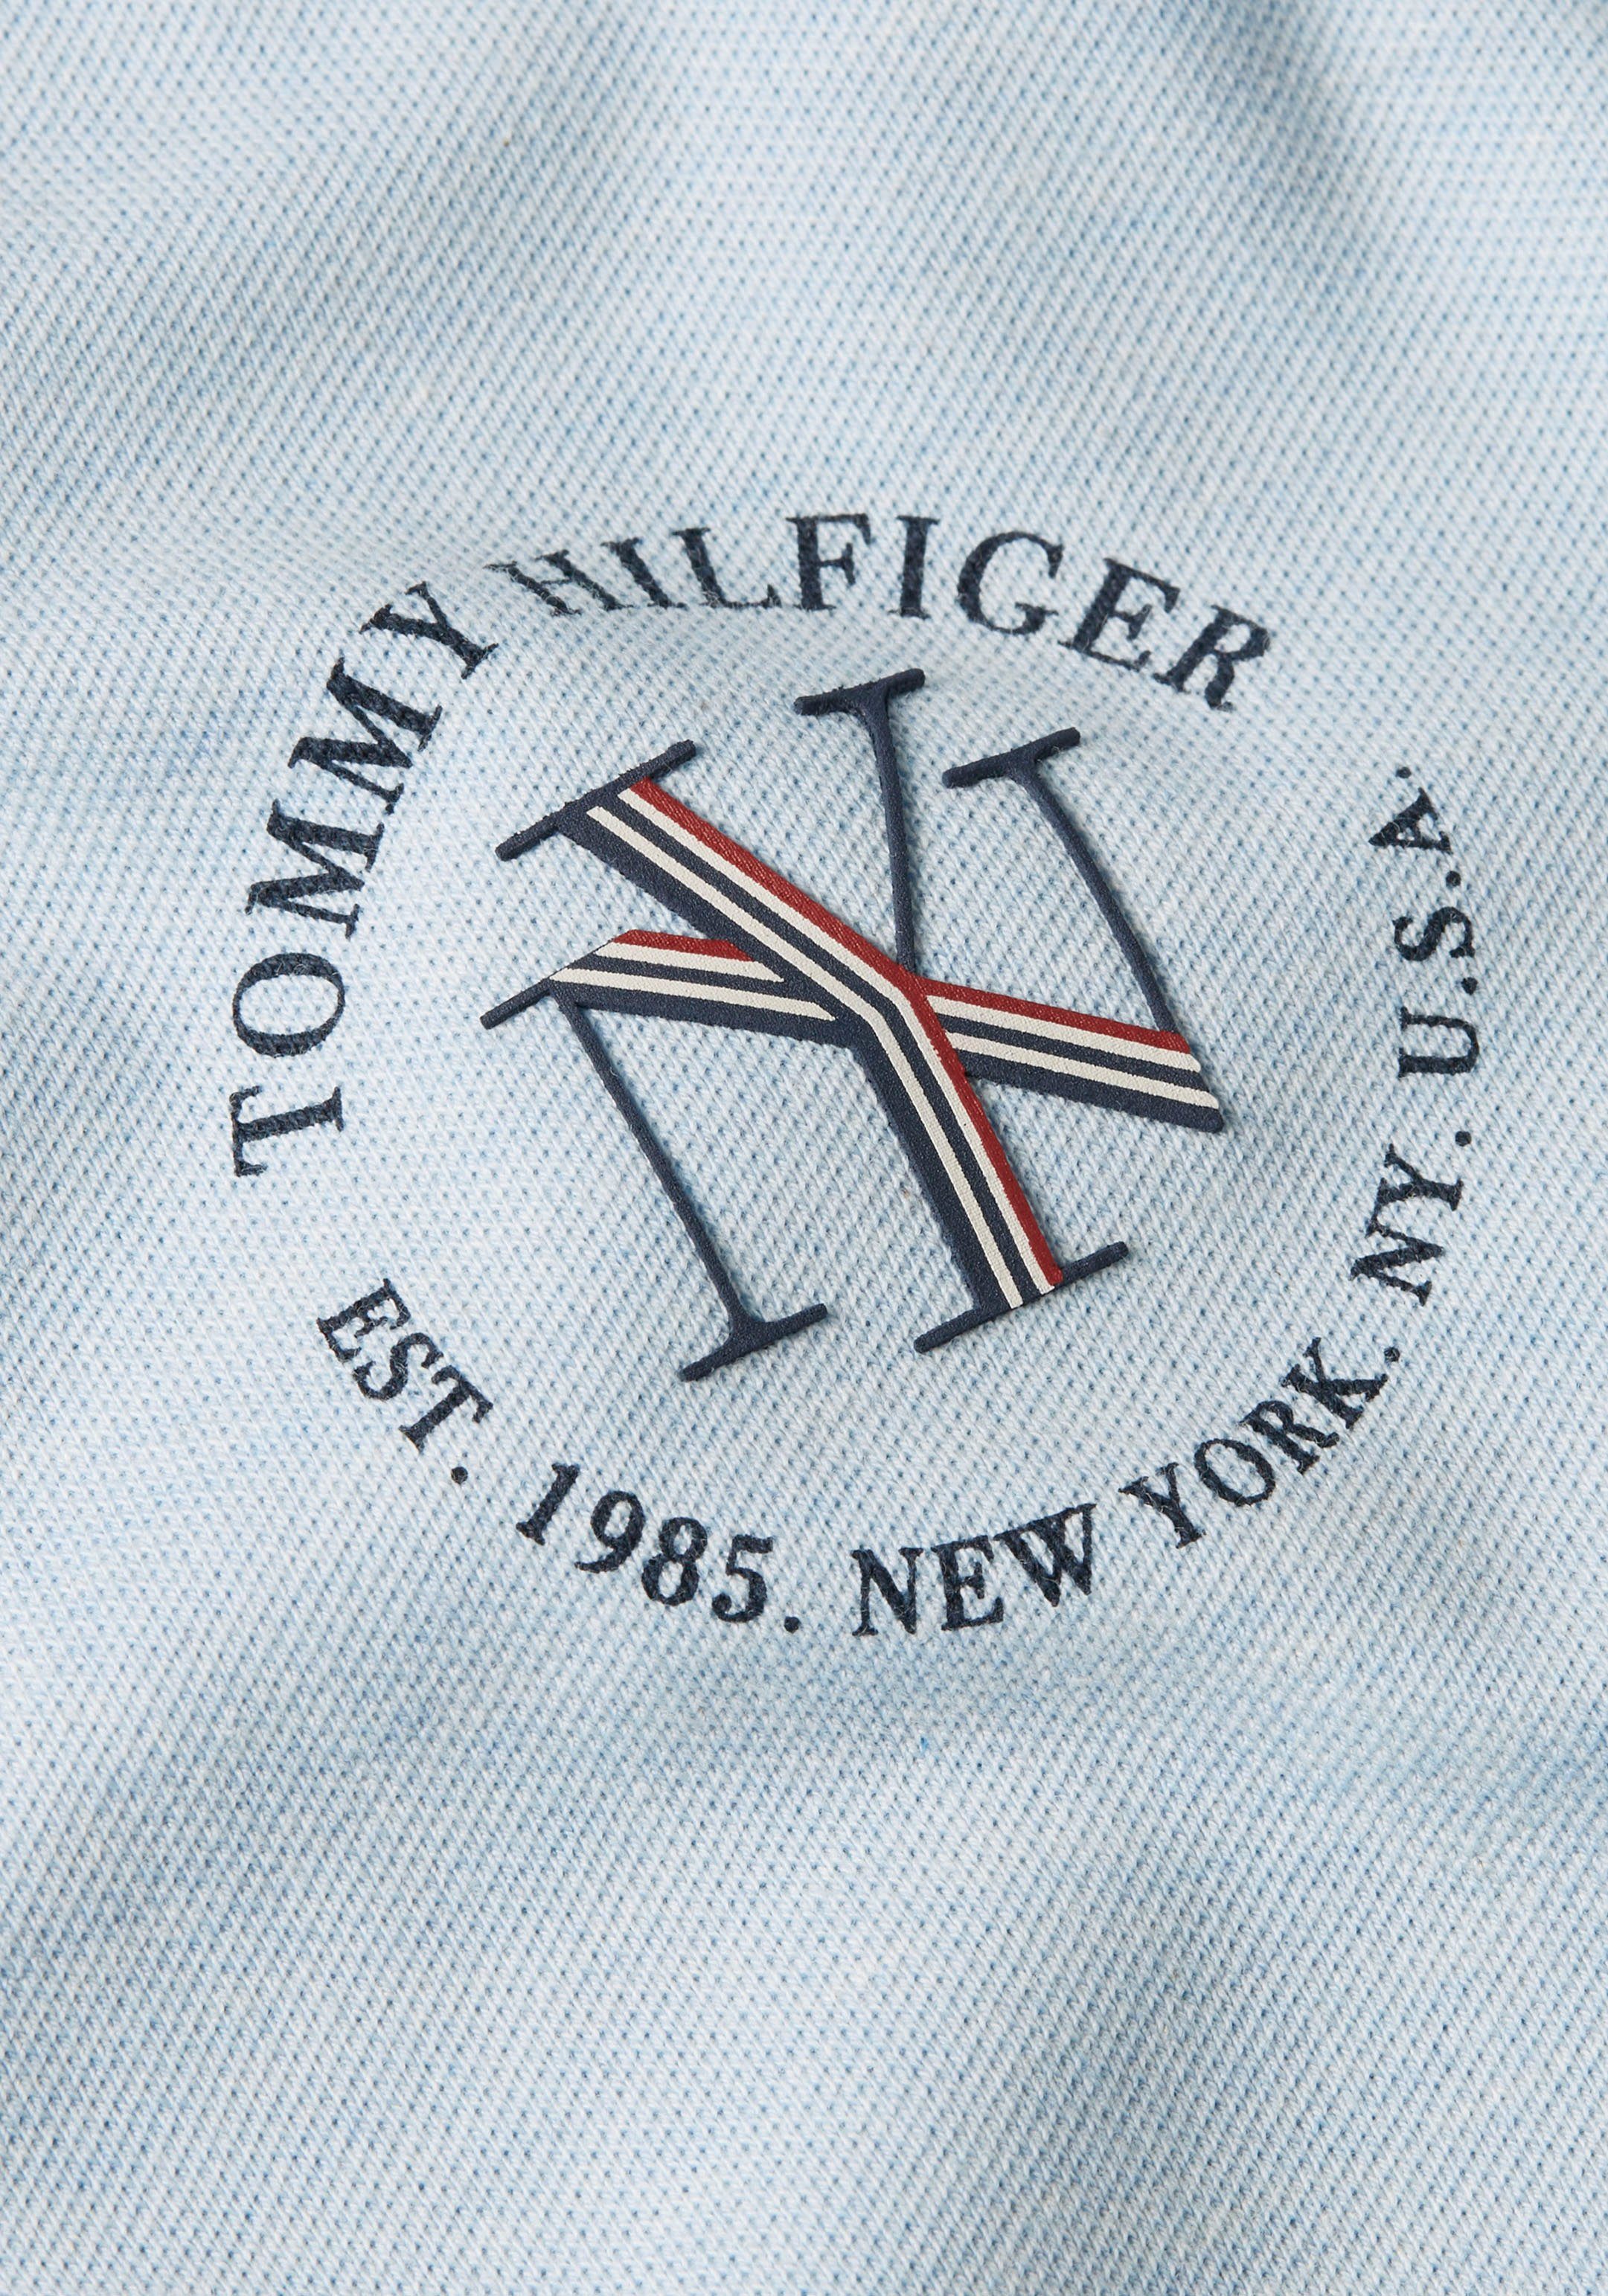 POLO Hilfiger ROUNDALL Markenlabel Poloshirt mit SS Breezy-Blue-Heather Hilfiger NYC Tommy REG Tommy